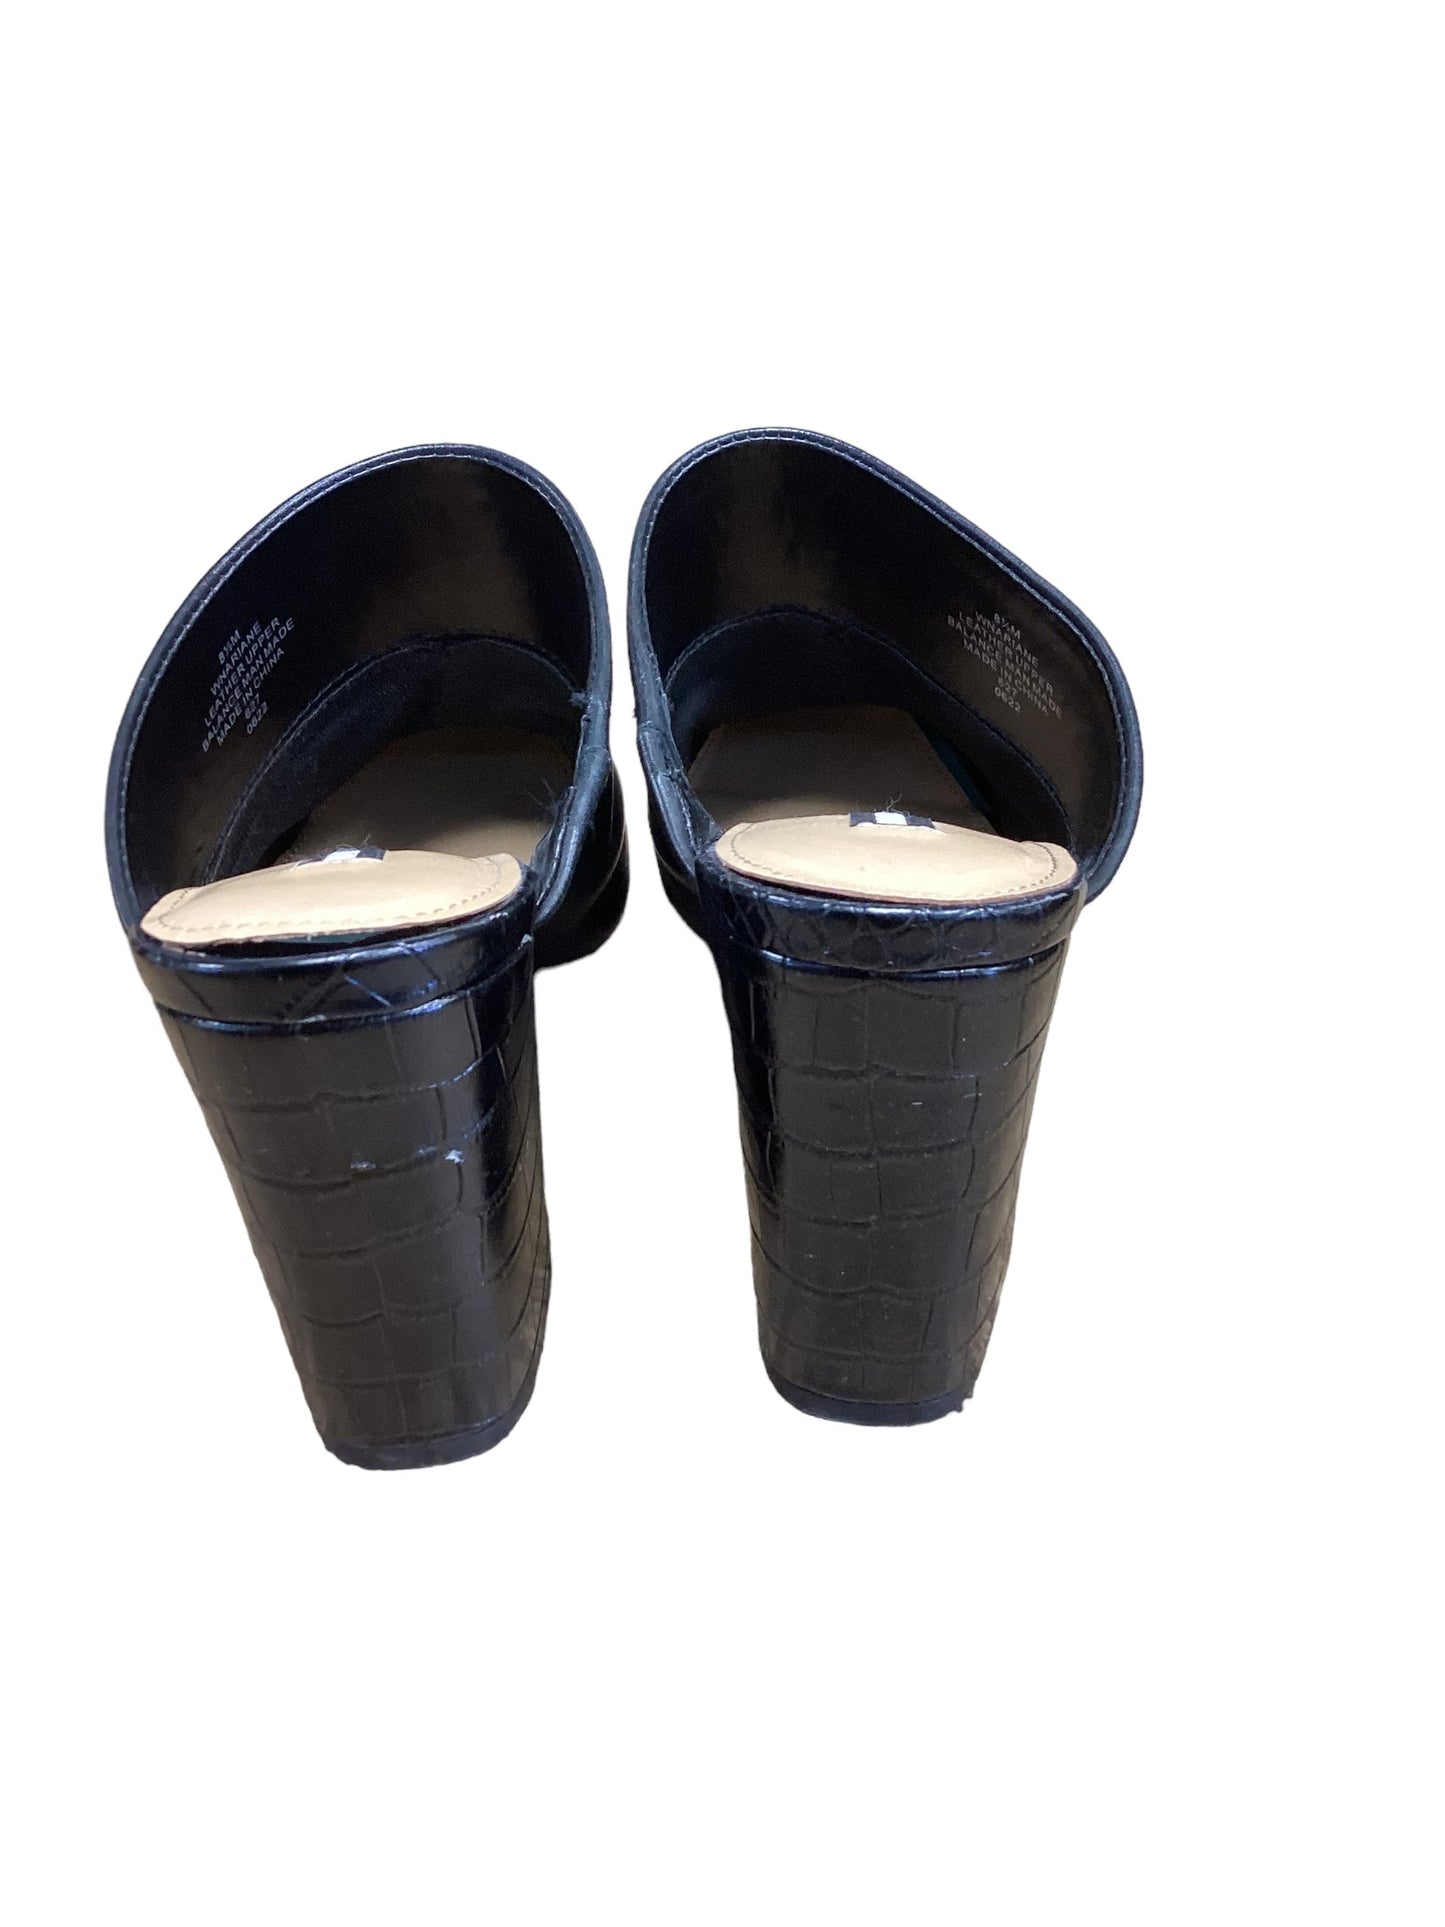 Black Shoes Heels Block Nine West, Size 8.5